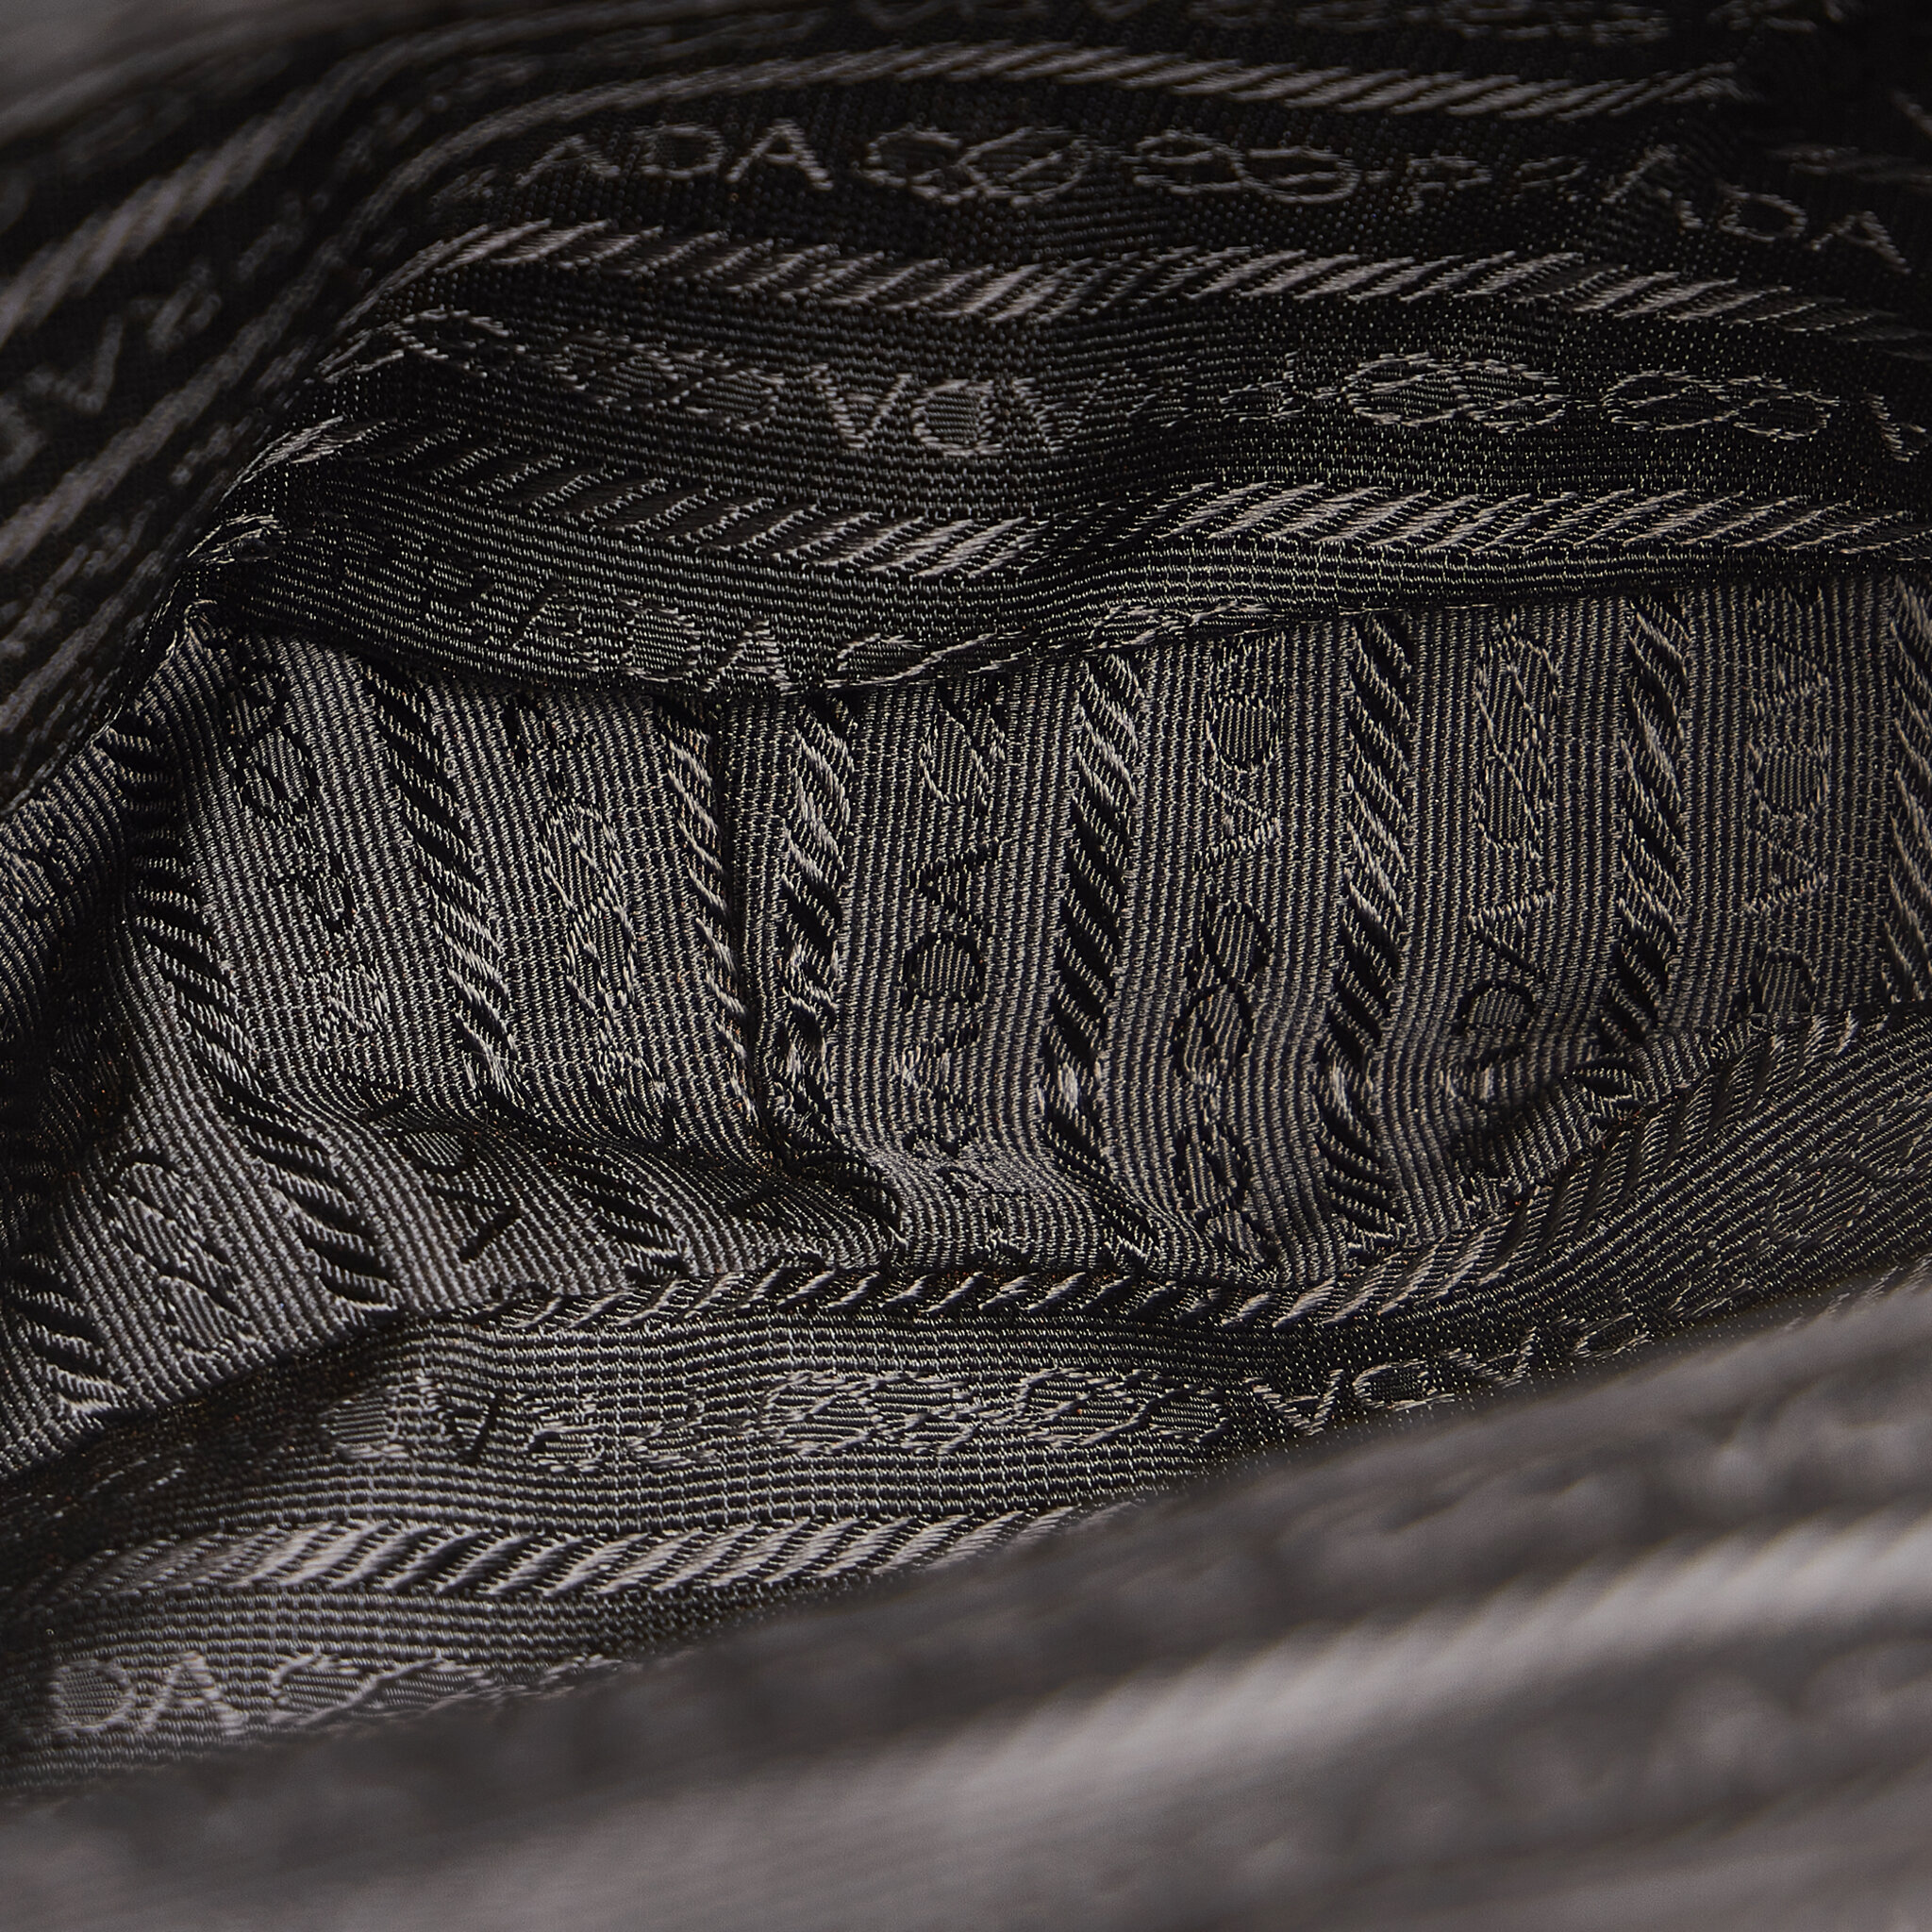 Prada Tessuto Backpack, ONESIZE, black